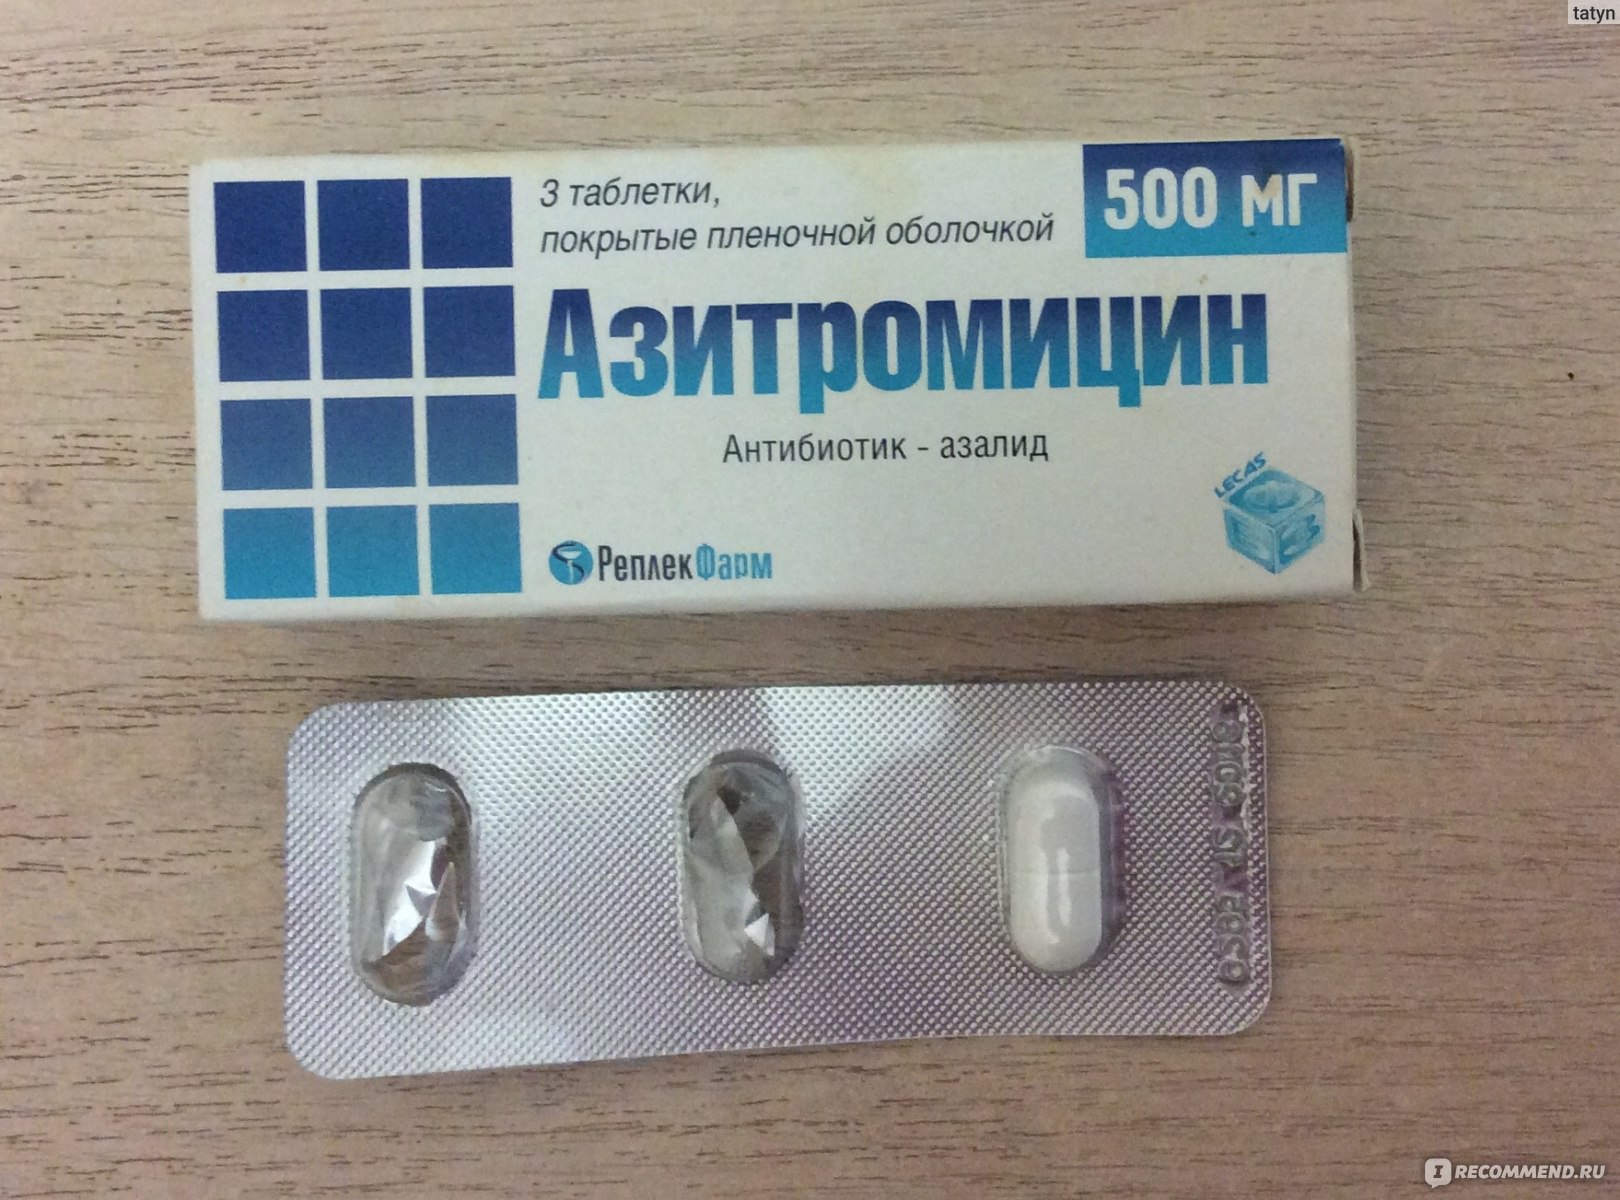 Легкий антибиотик в таблетках взрослым. Антибиотик Азитромицин 500 мг. Антибиотик 3 таблетки в упаковке Азитромицин. Антибиотик от кашля 3 таблетки название. Сильный антибиотик от простуды 3 таблетки.